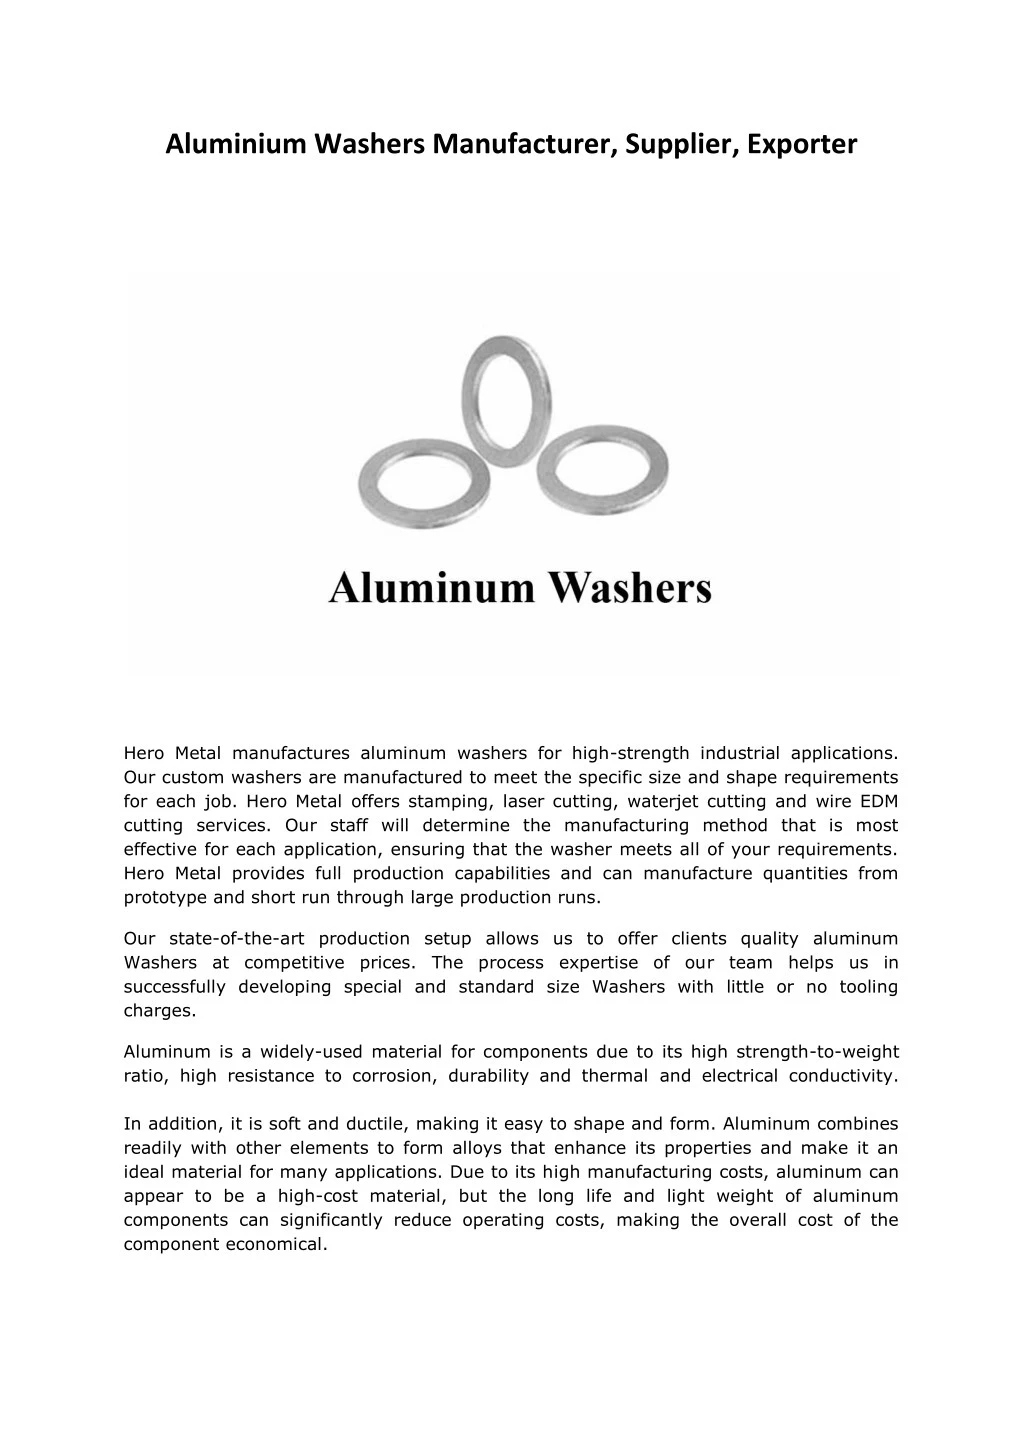 aluminium washers manufacturer supplier exporter